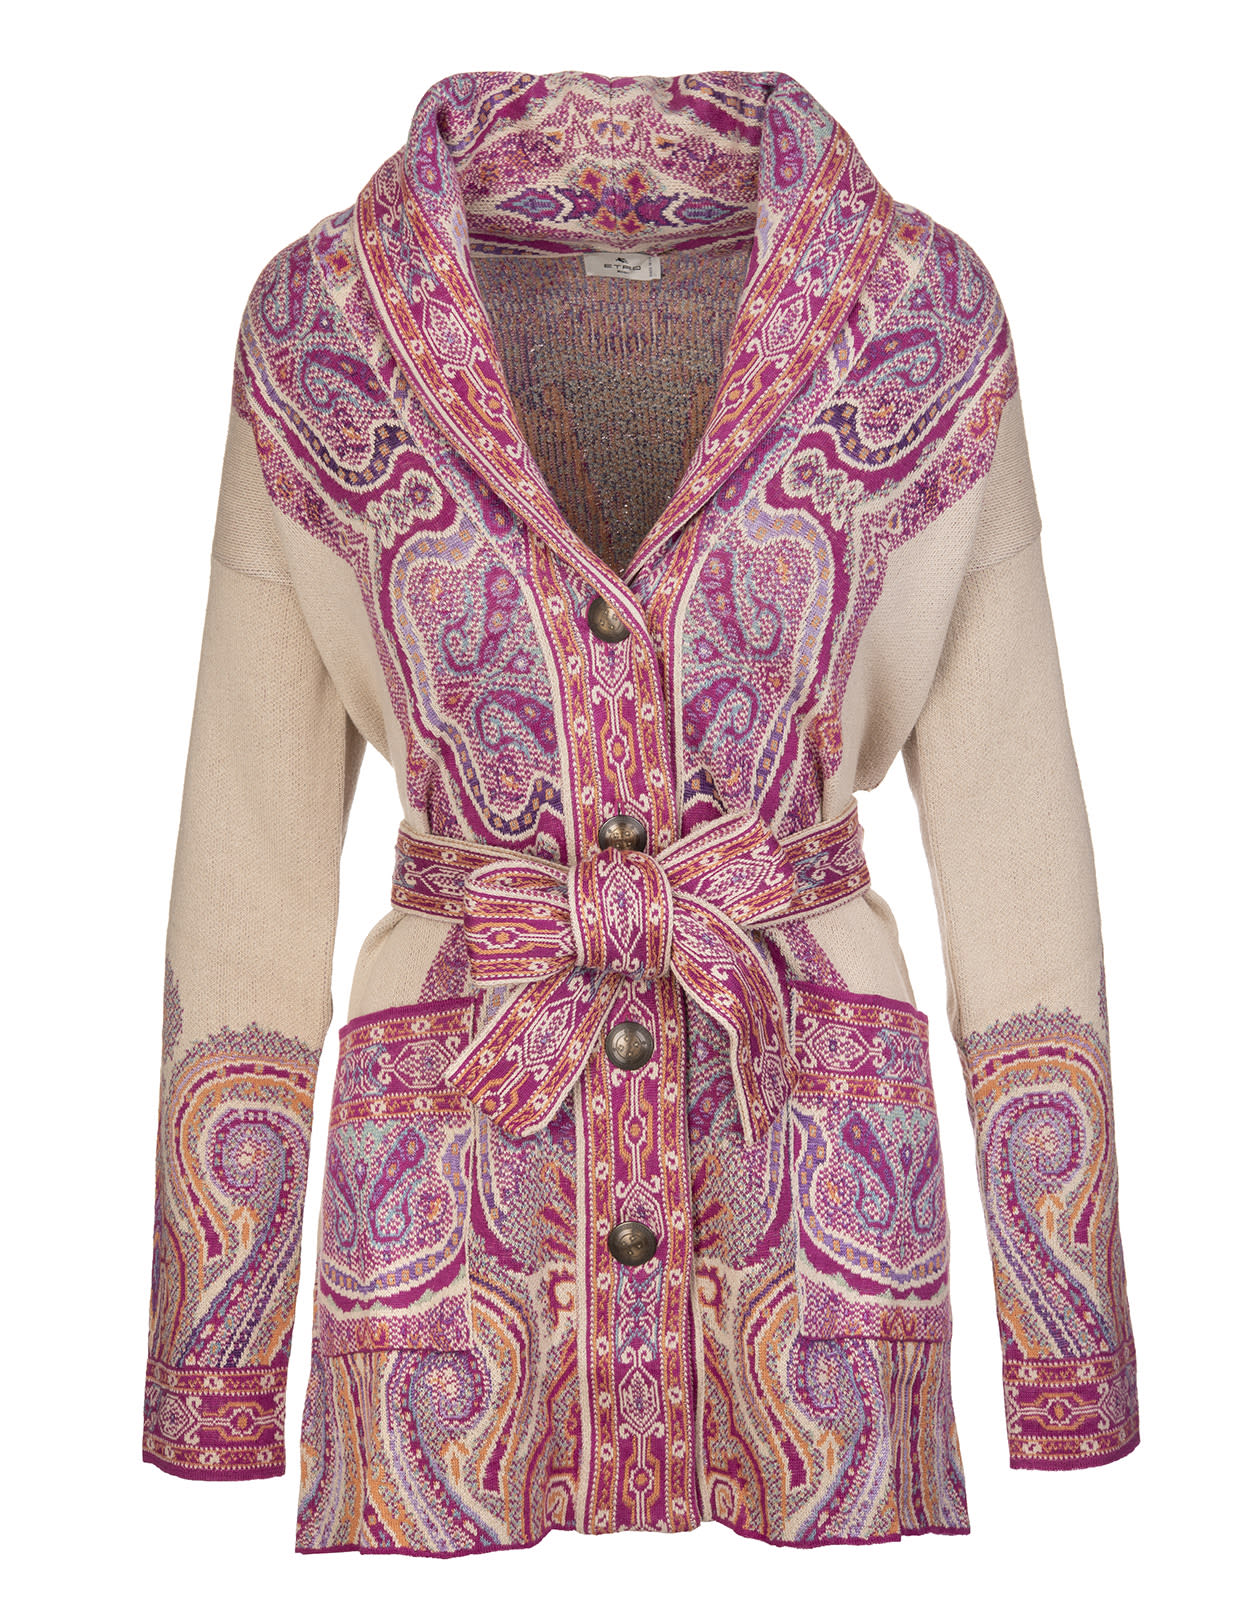 Etro Jacquard Silk Cardigan With Pink Paisley Motifs